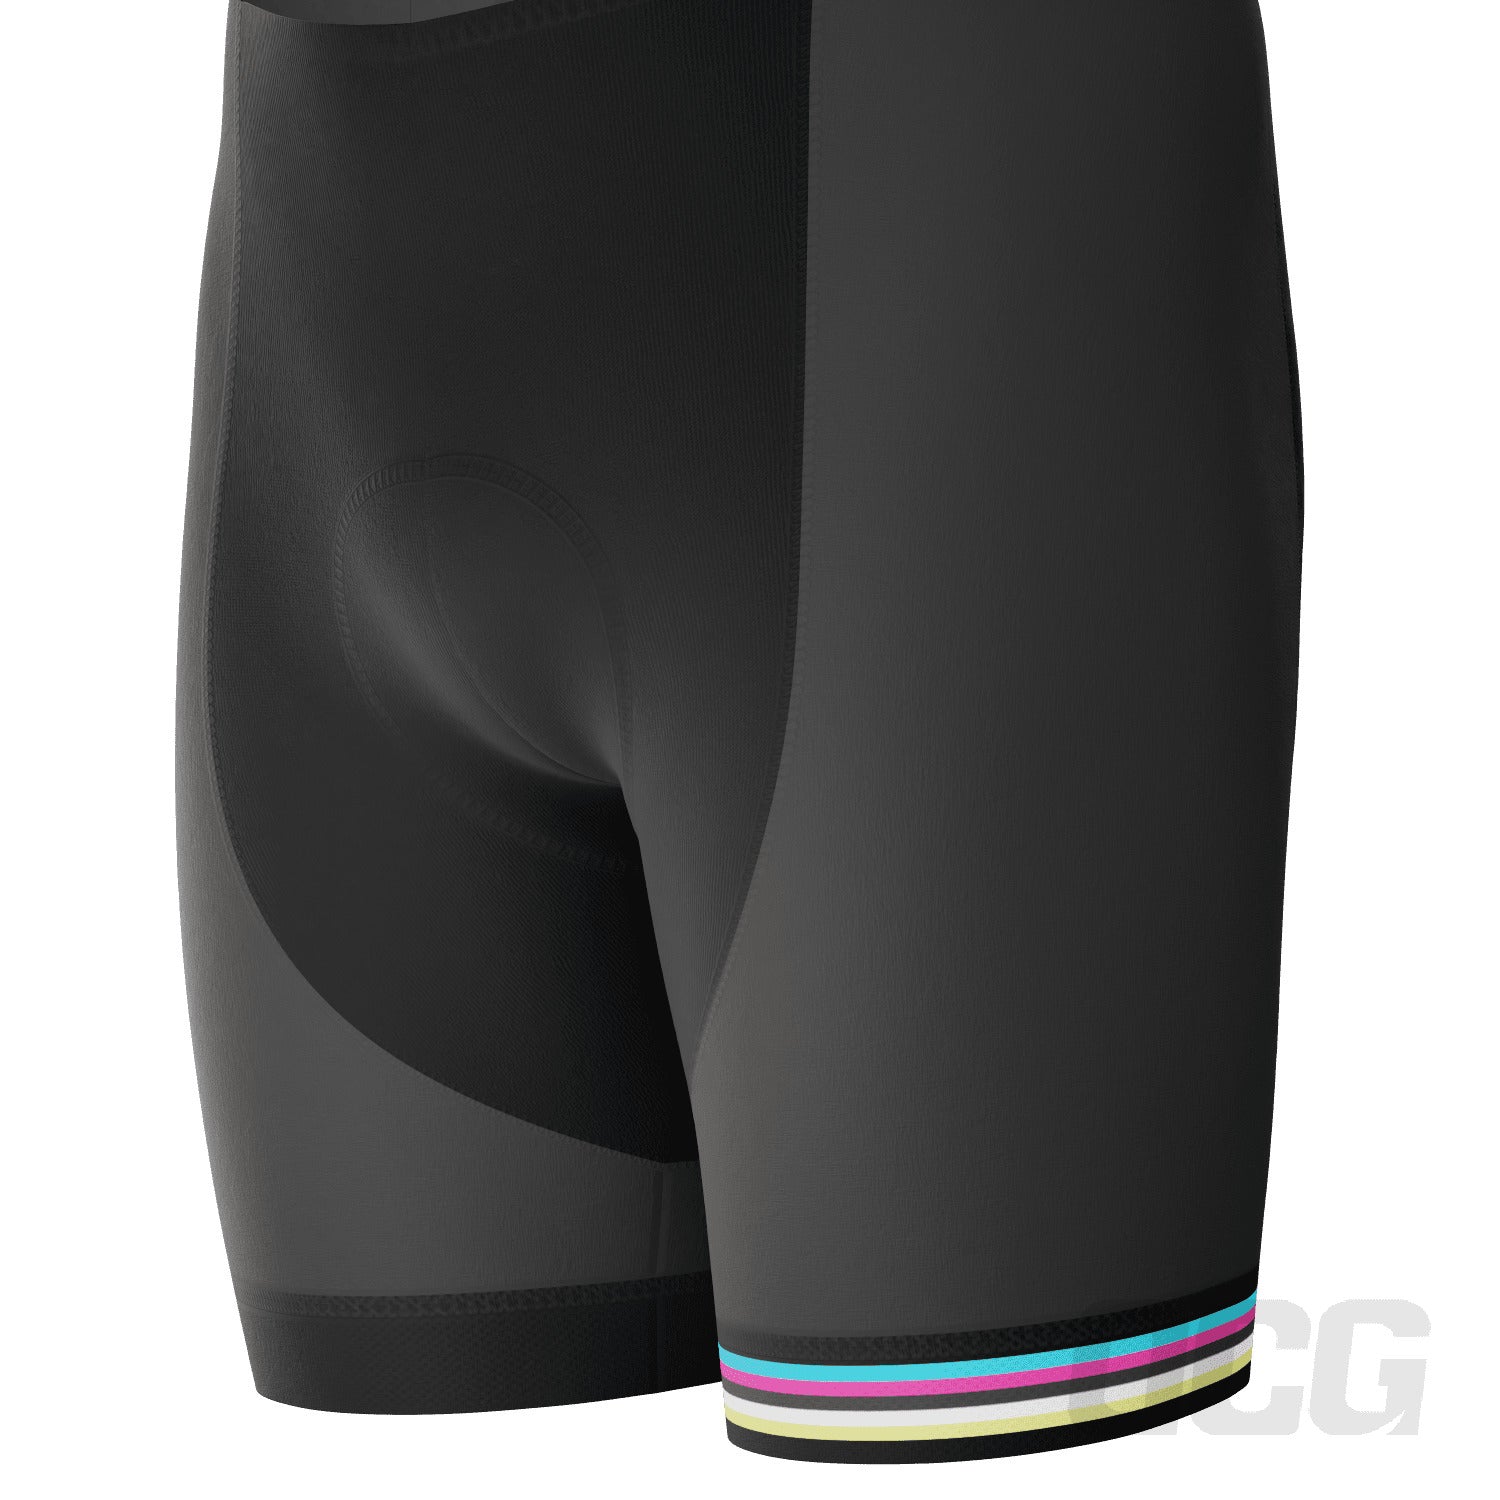 Men's High Viz Rainbow Stripes 2 Piece Cycling Kit